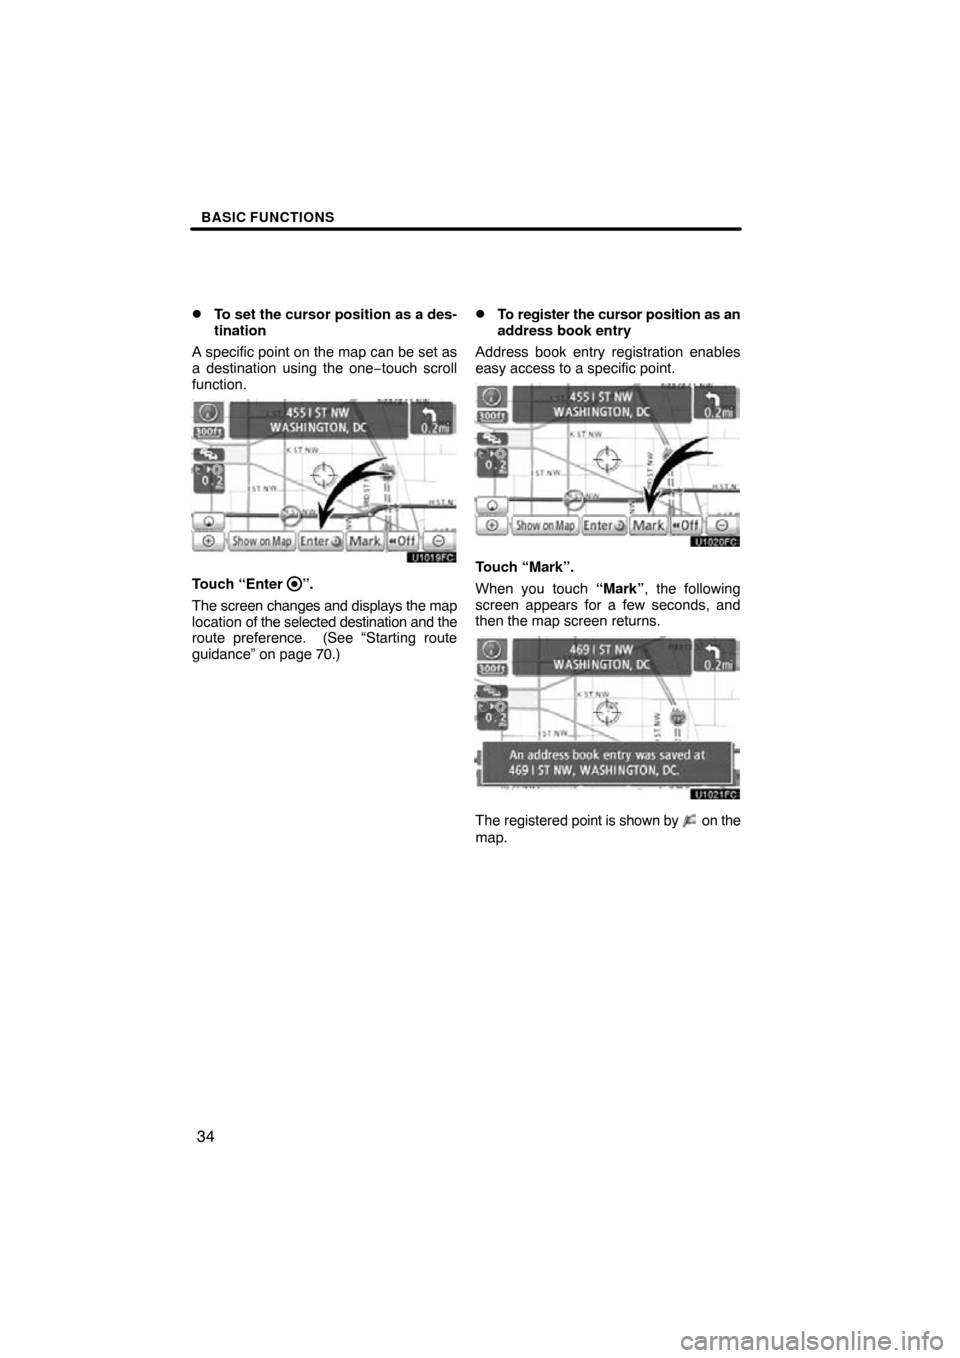 TOYOTA CAMRY 2010 XV40 / 8.G Navigation Manual BASIC FUNCTIONS
34

To set the cursor position as a des-
tination
A specific point on the map can be set as
a destination using the one −touch scroll
function.
Touch “Enter ”.
The screen change